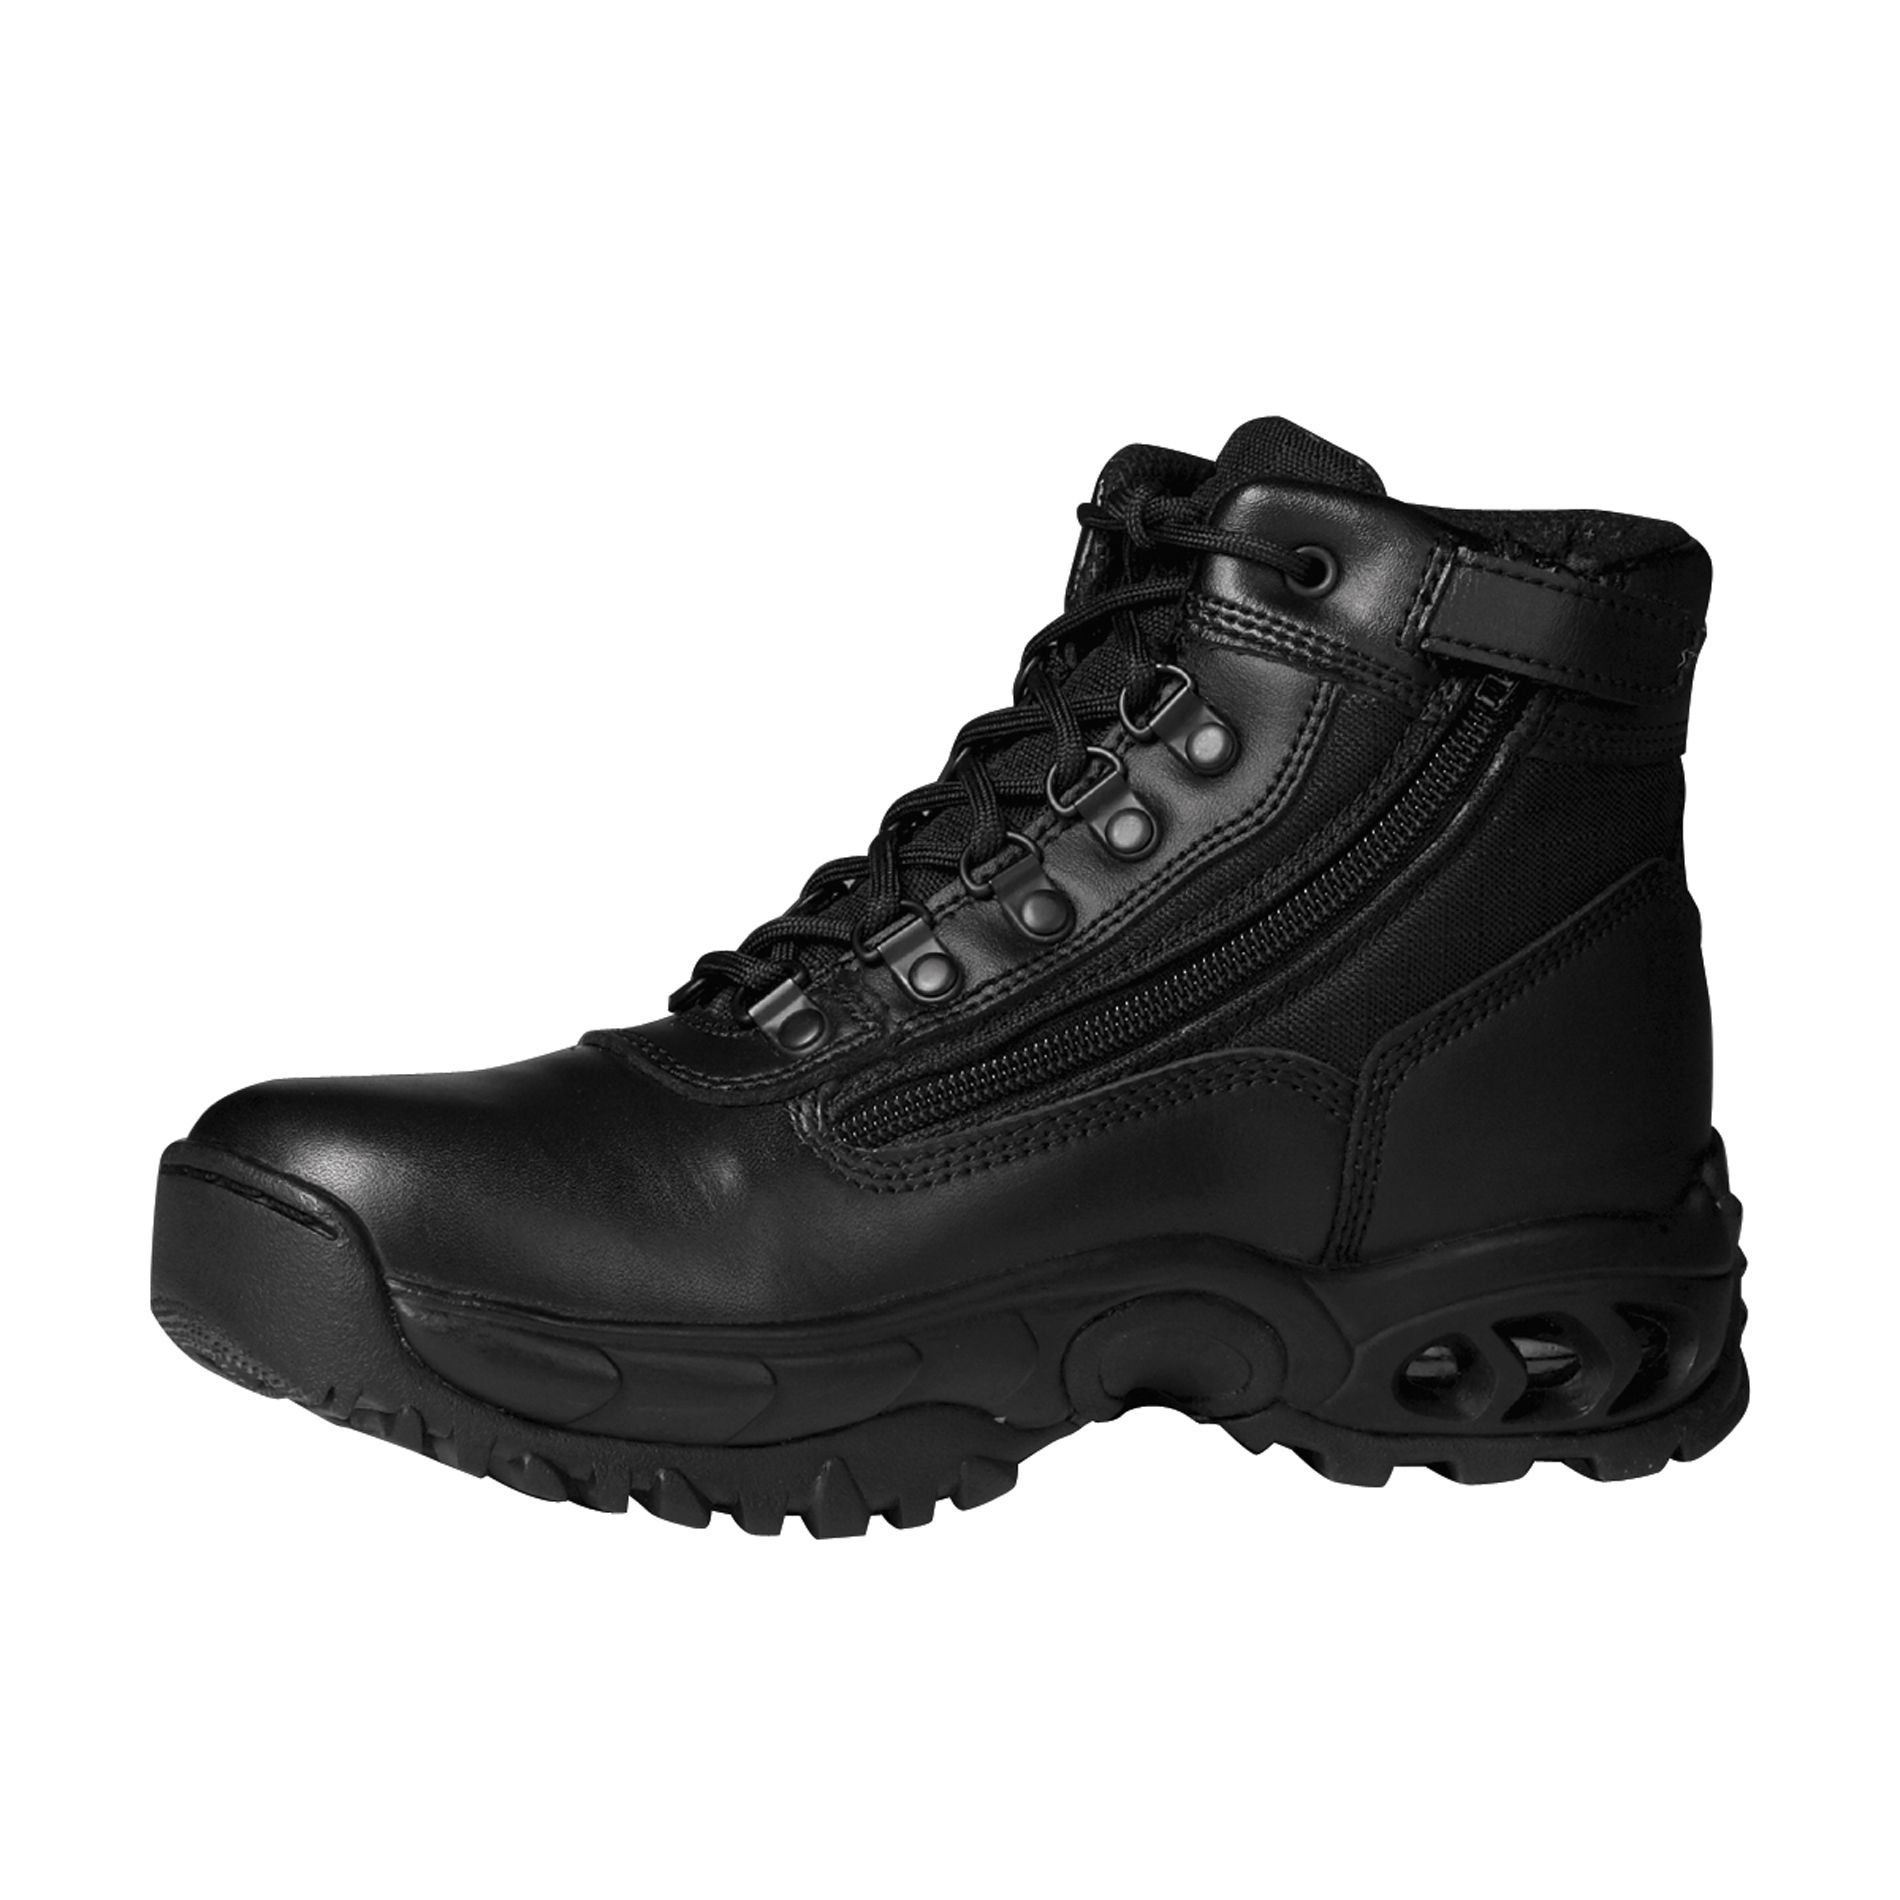 Ridge Footwear Men's 6" Air-Tac Leather Steel Toe Work Boot 8003ST Wide Width Available - Black